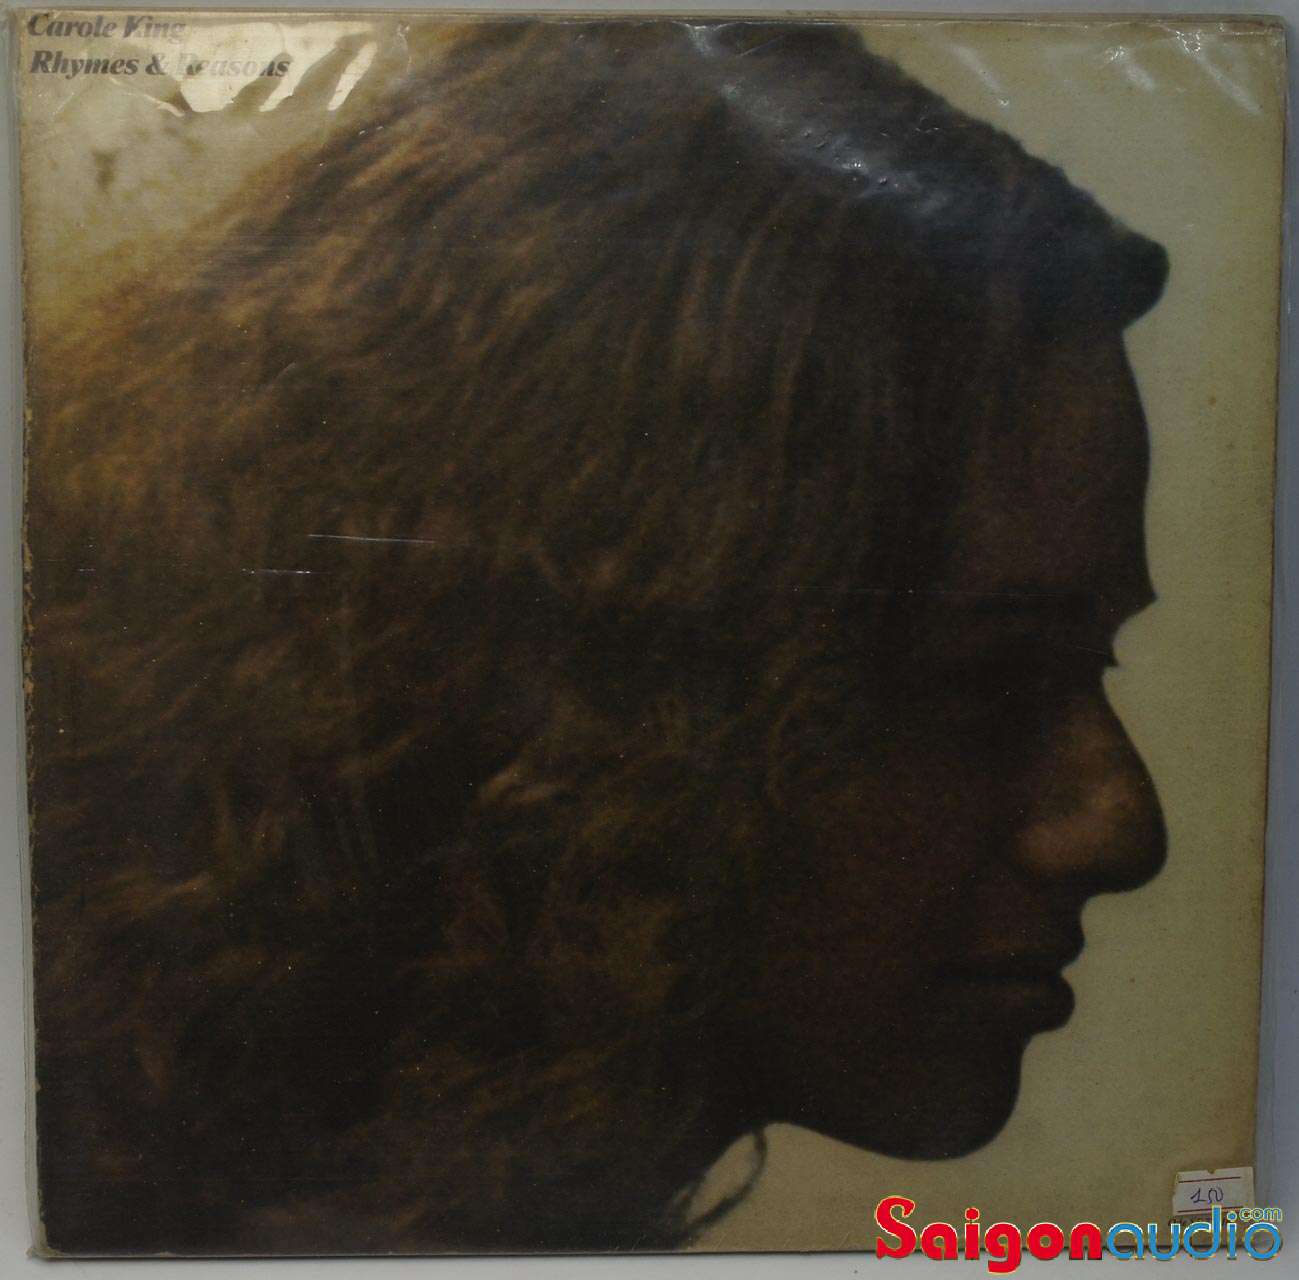 Đĩa than LP Carole King - Rhymes & Reasons (1972)